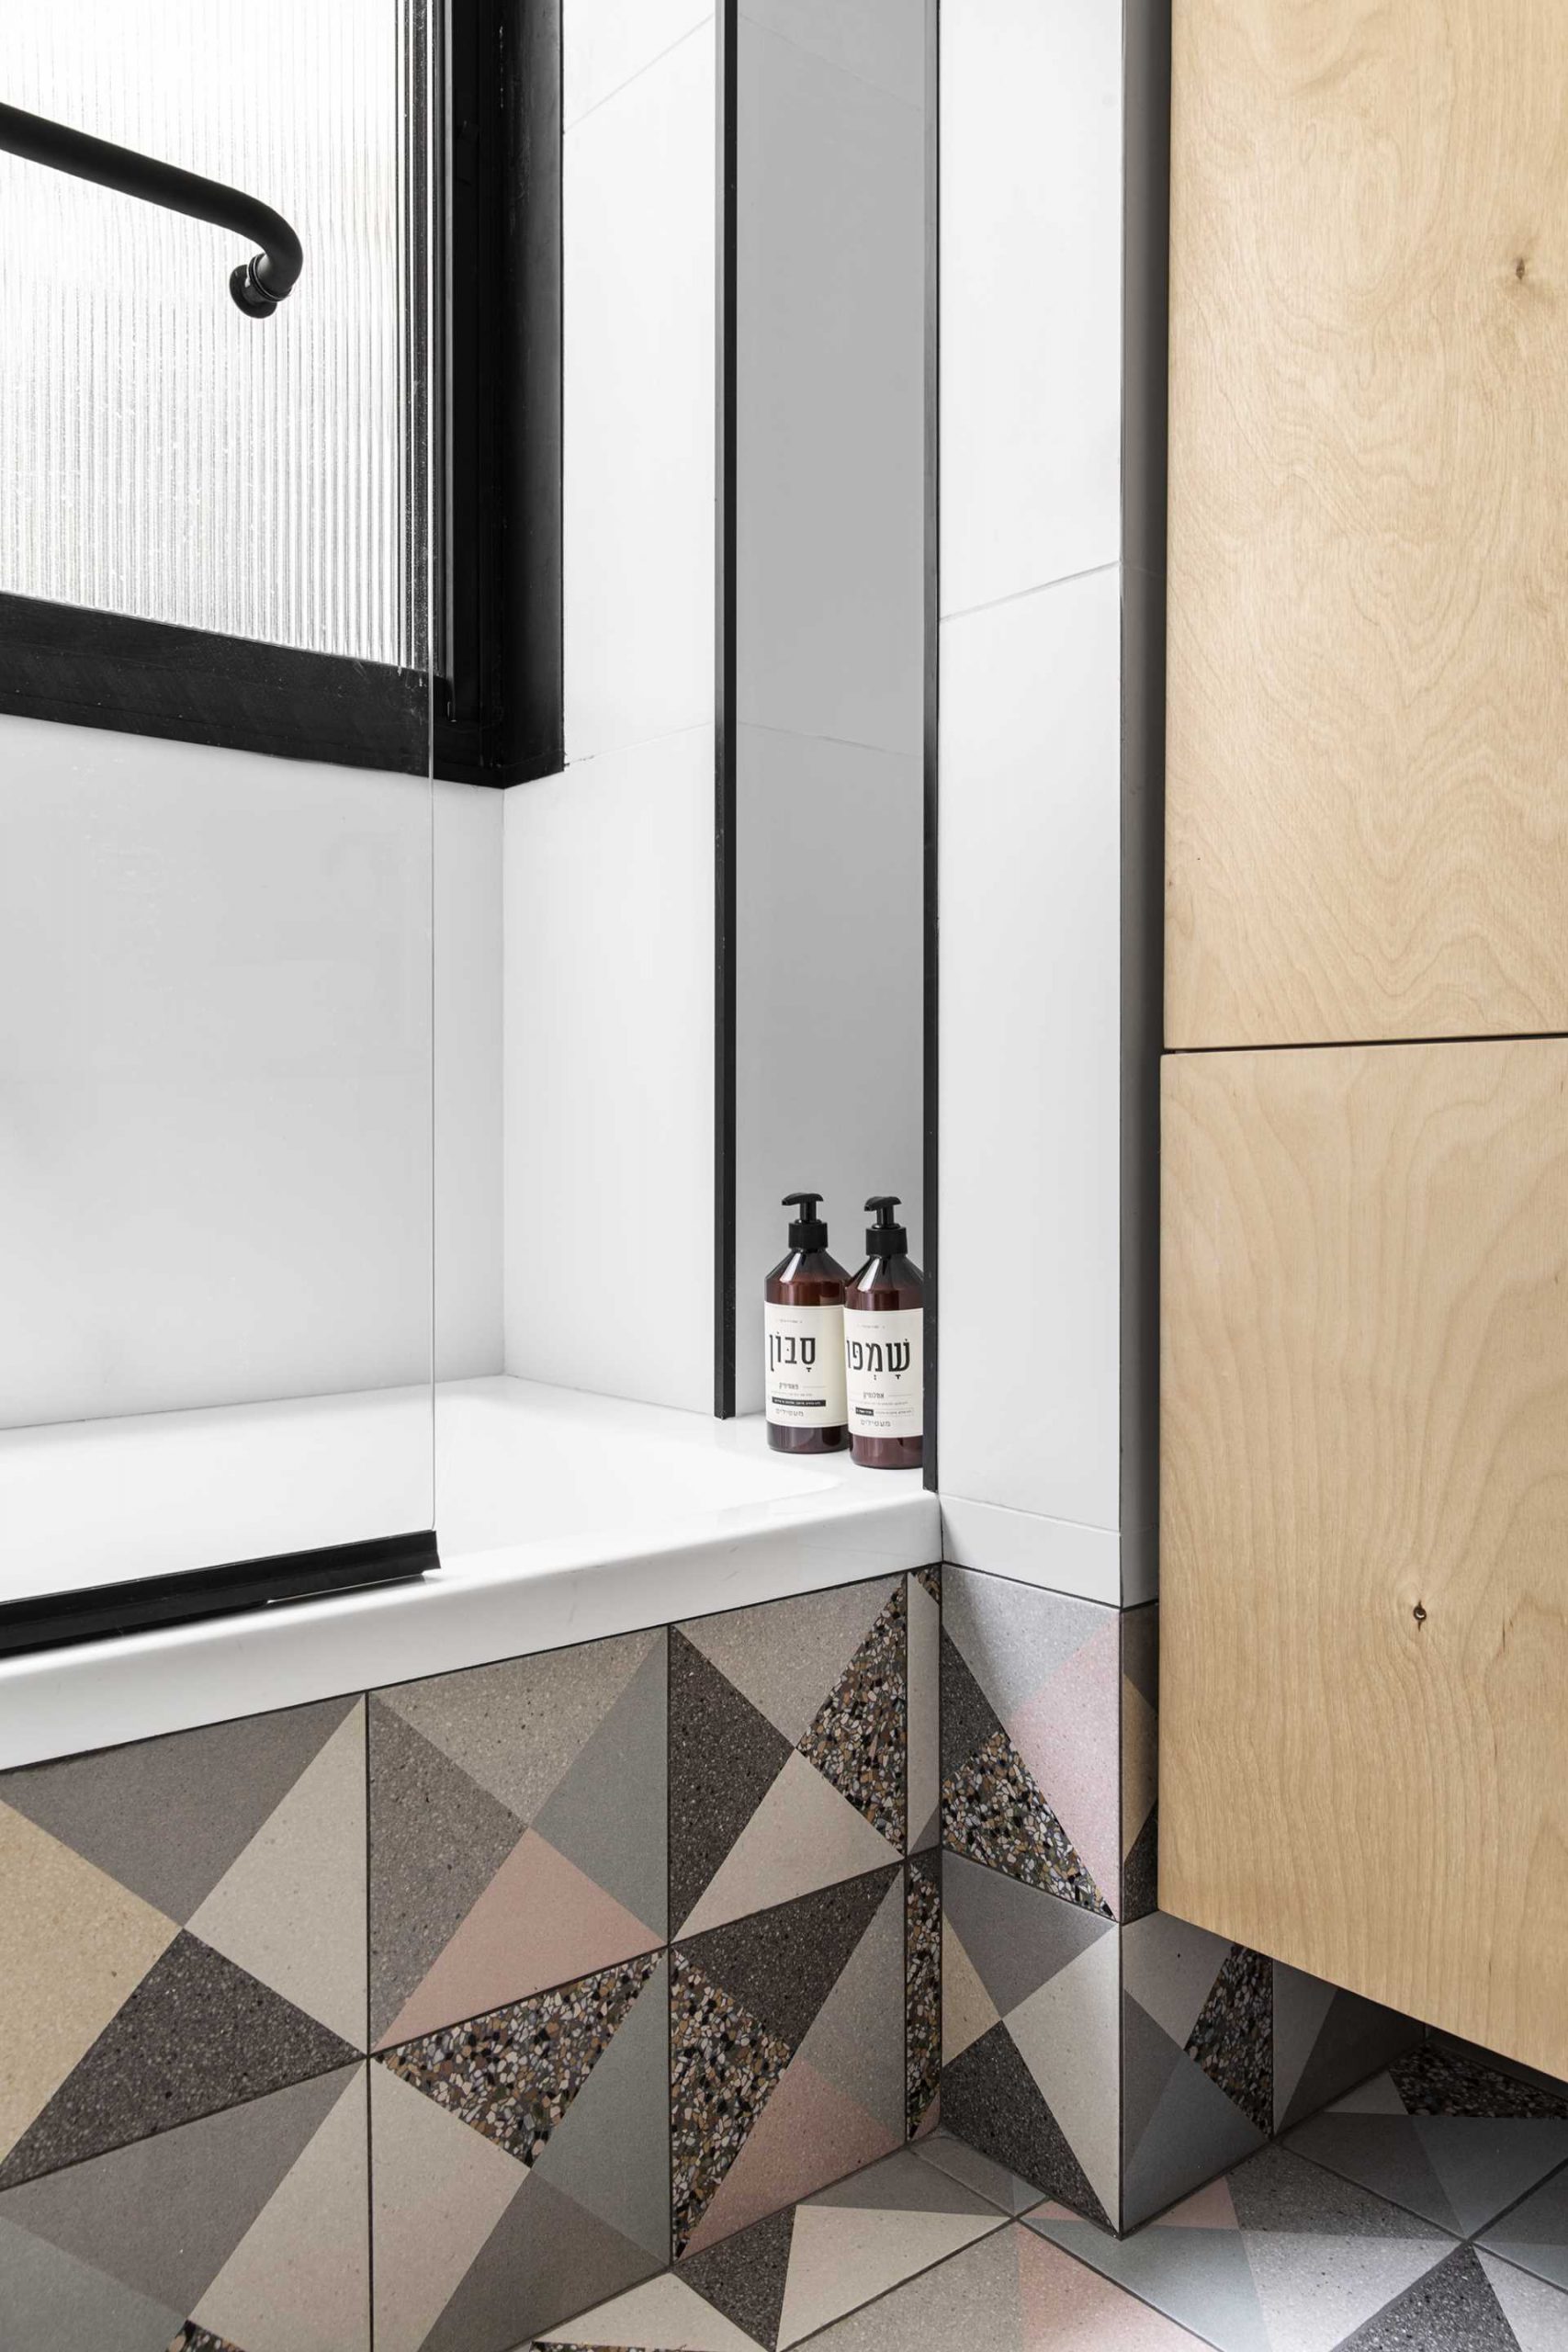 A modern bathroom with colorful geometric terrazzo tiles.